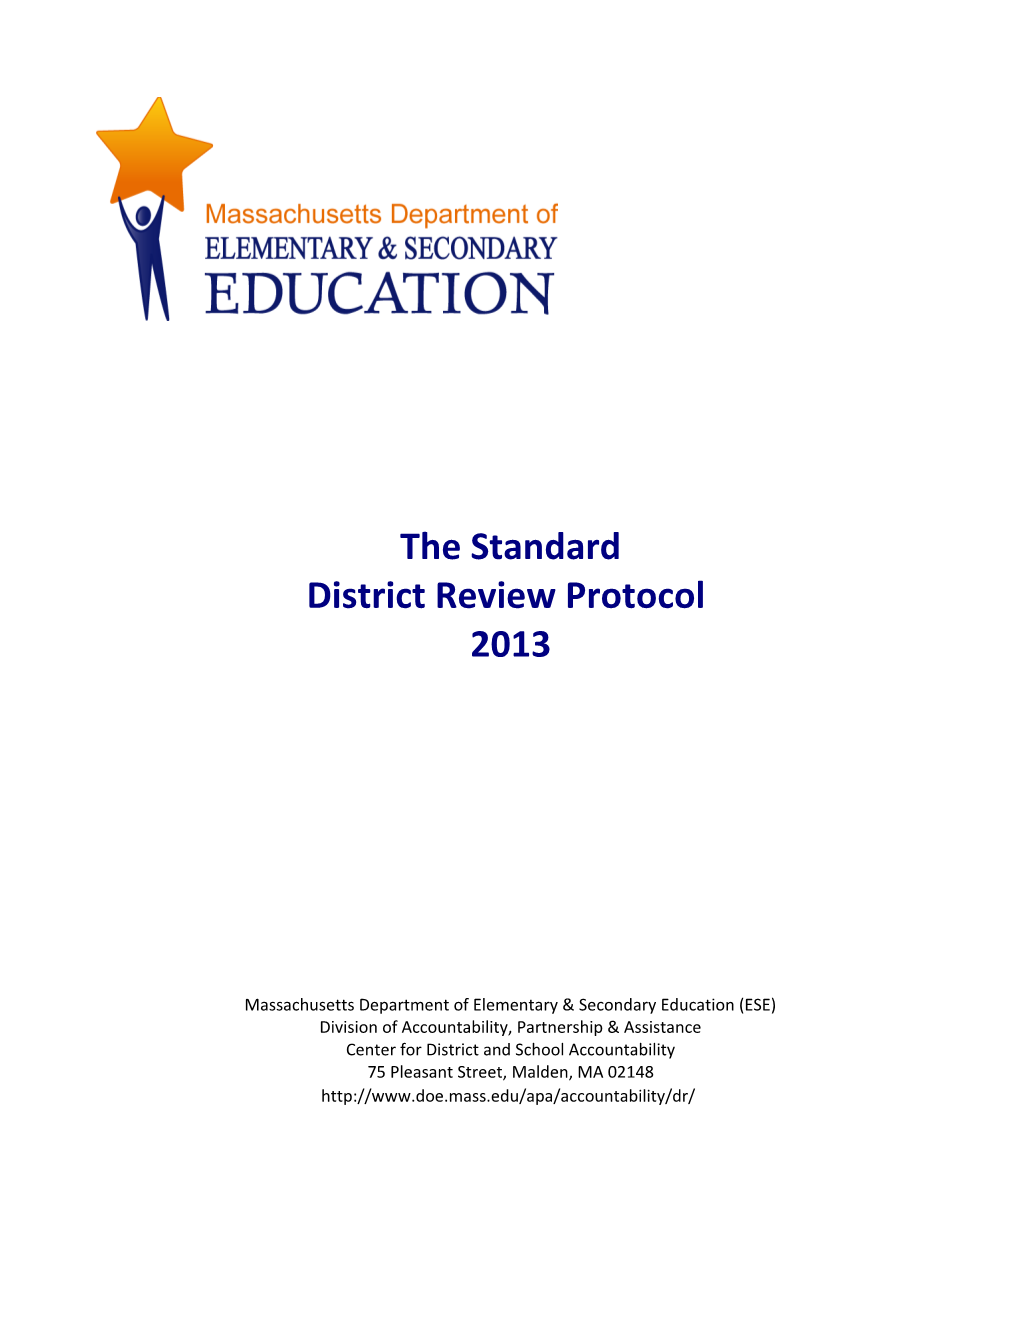 District Review Protocol 2013